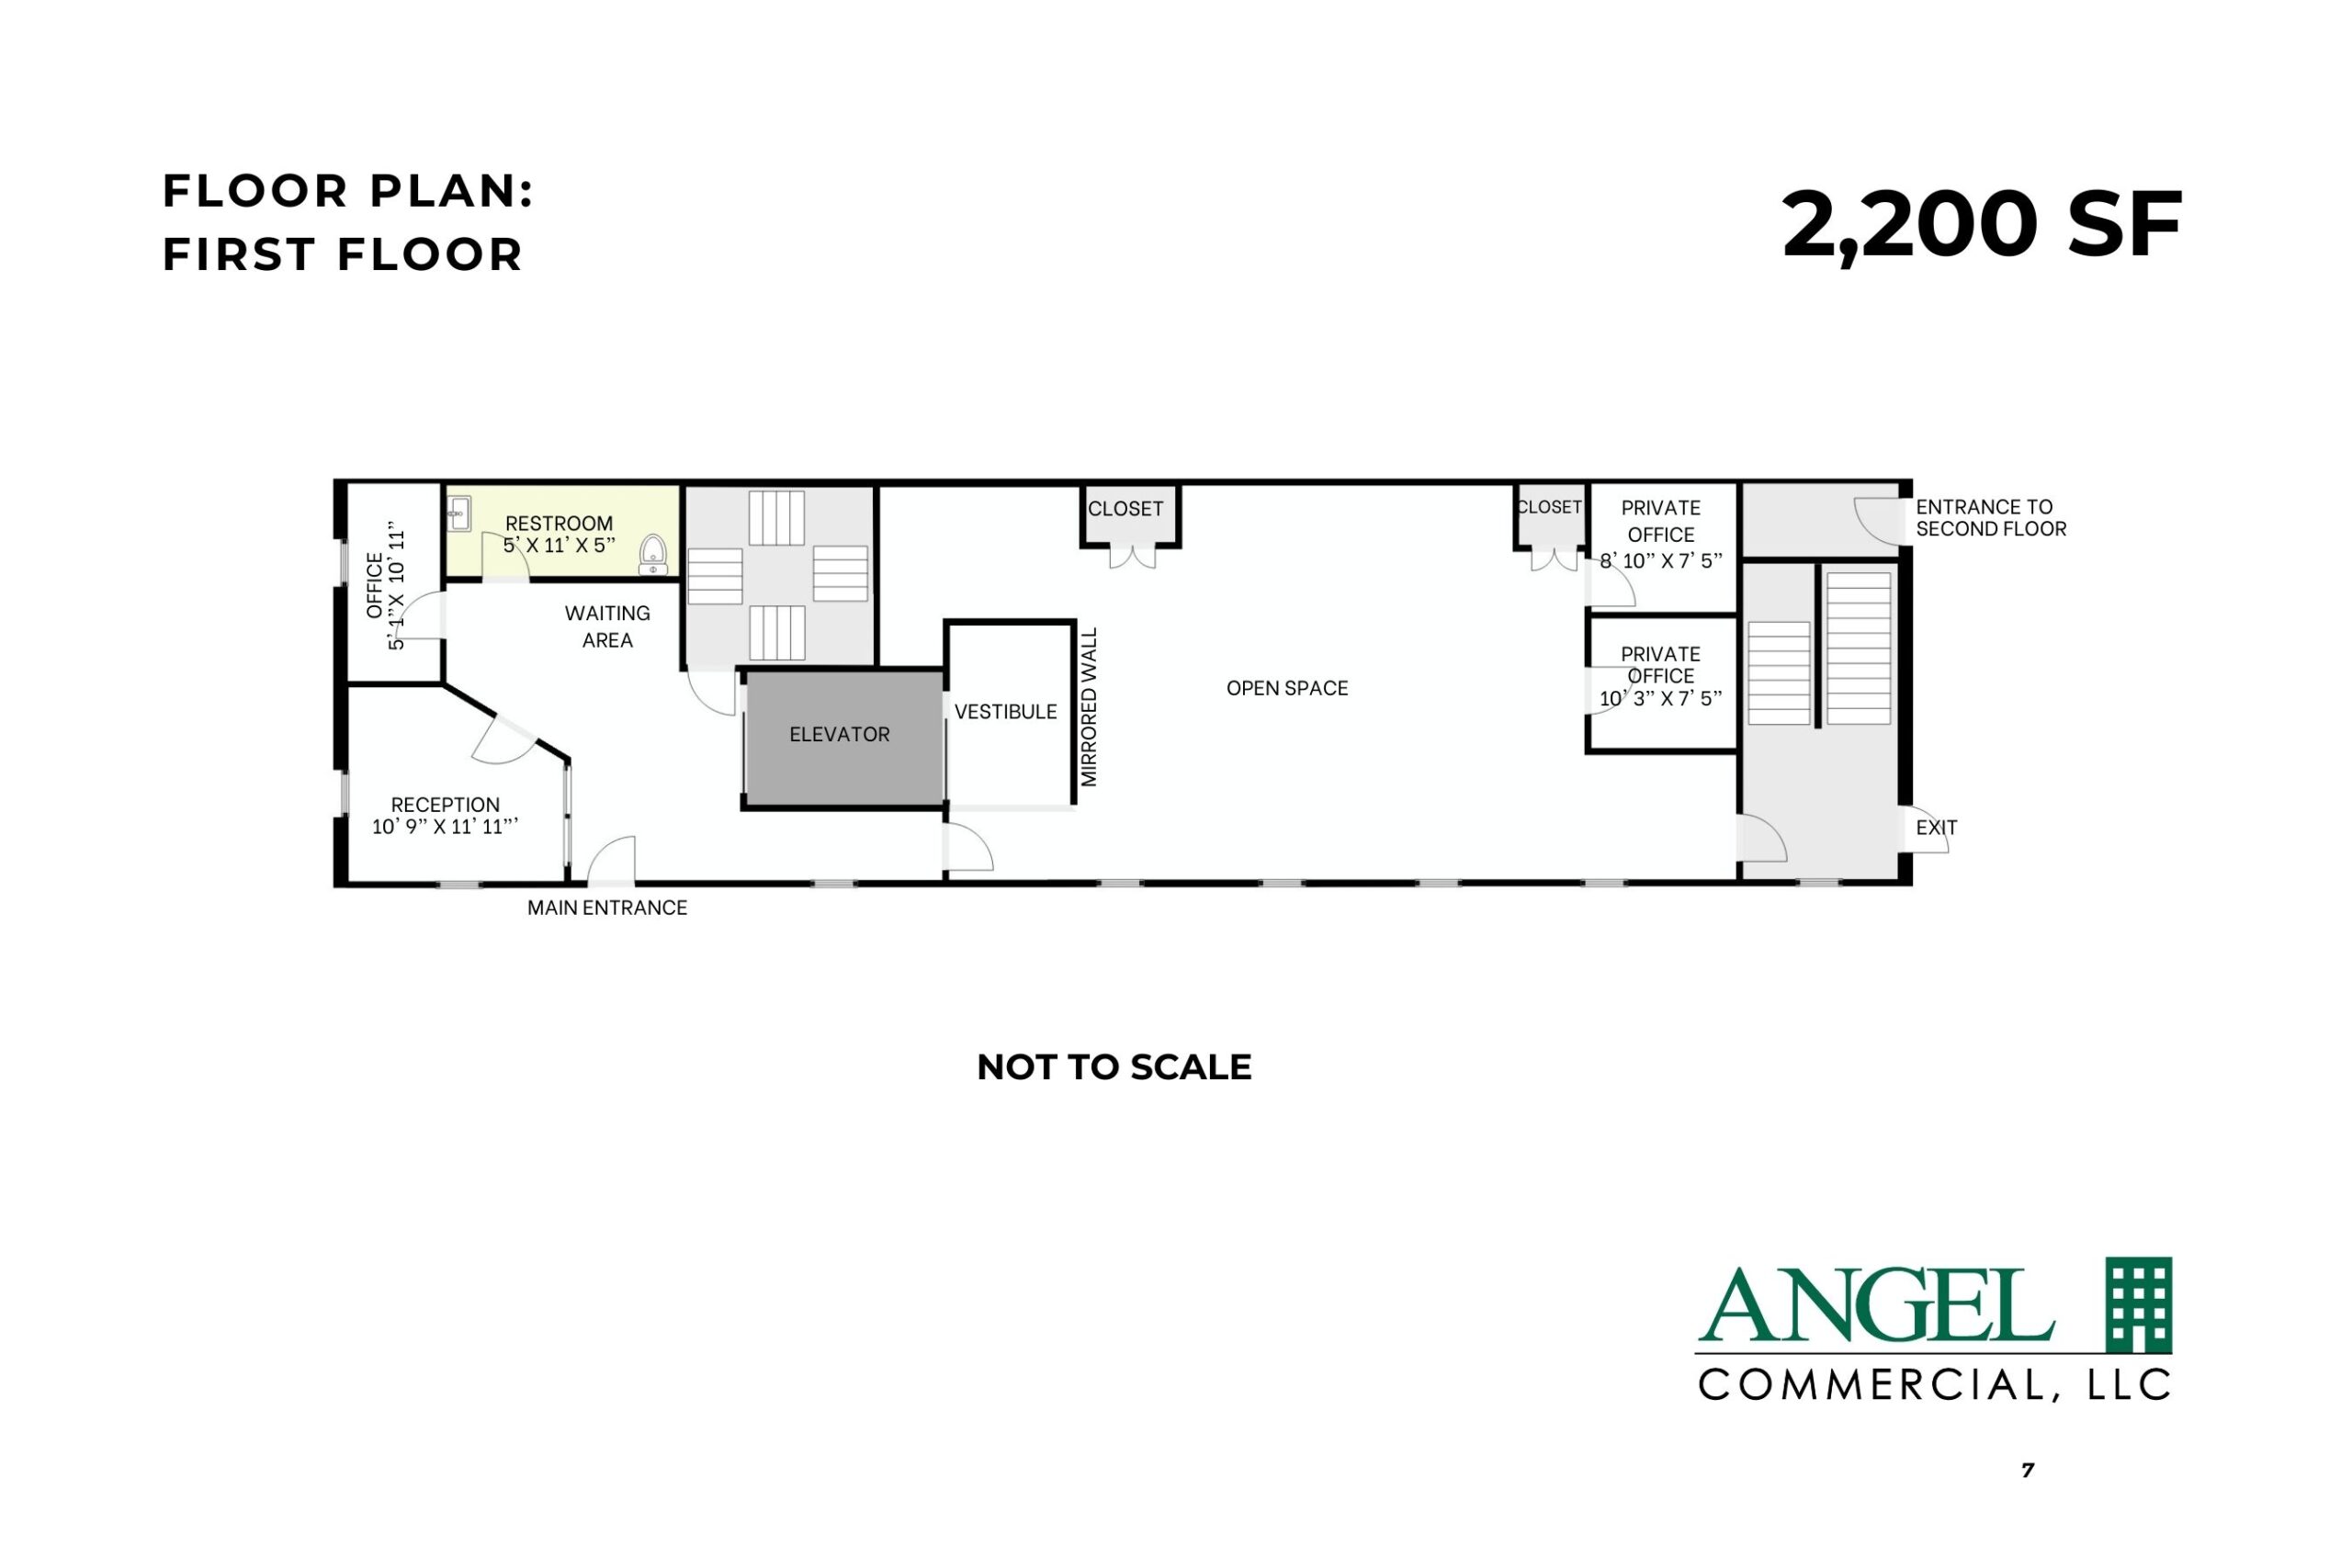 Floor Plan - First Floor - 2,200 SF Available